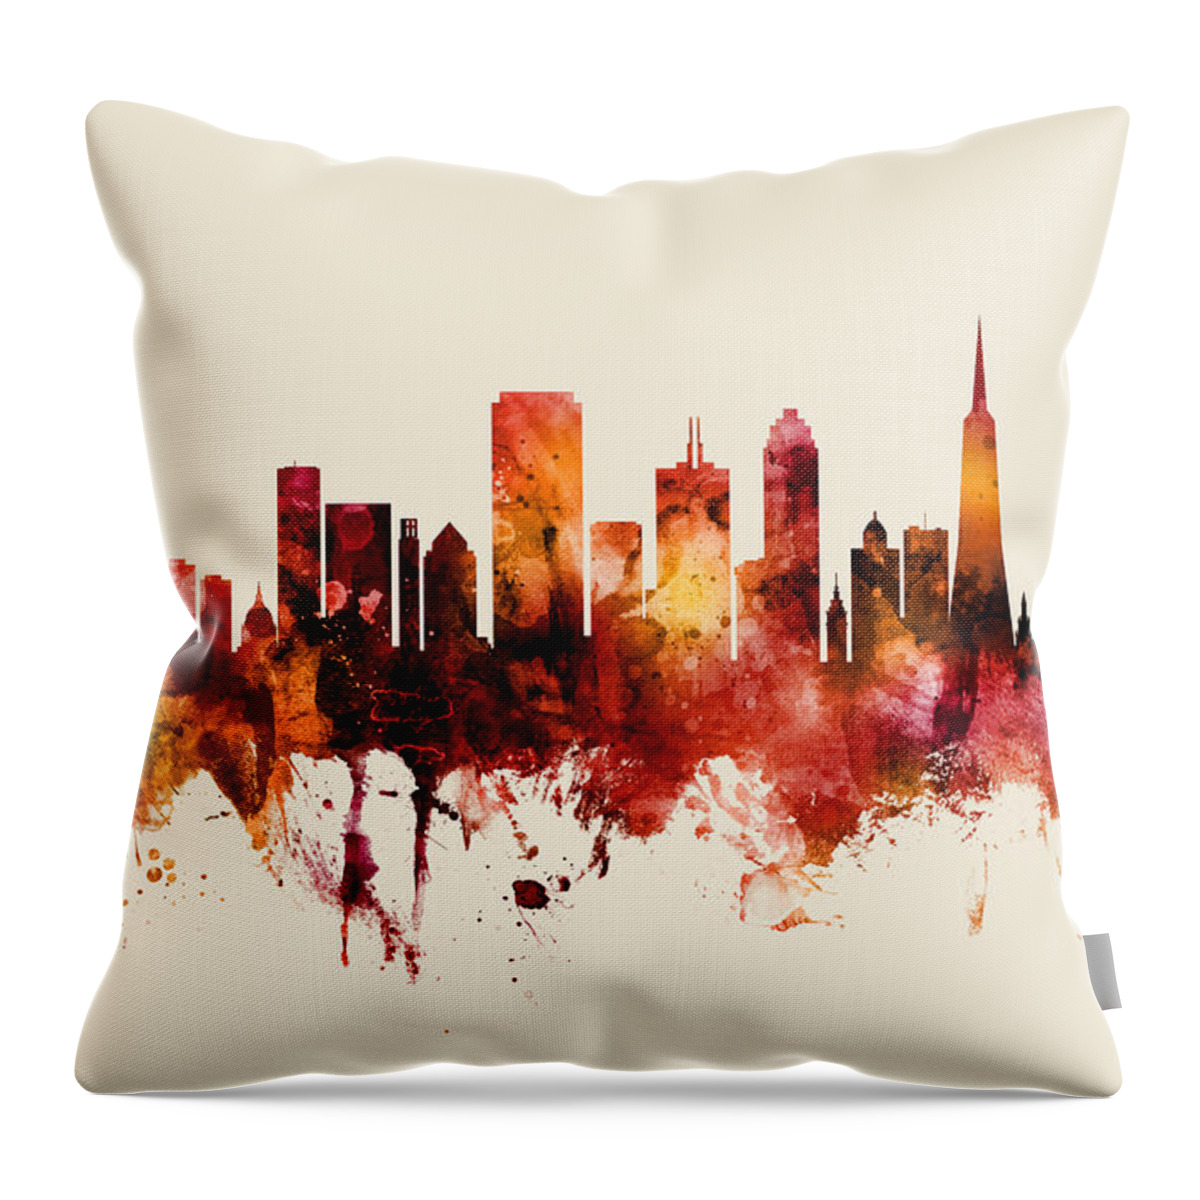 San Francisco Throw Pillow featuring the digital art San Francisco California Skyline by Michael Tompsett